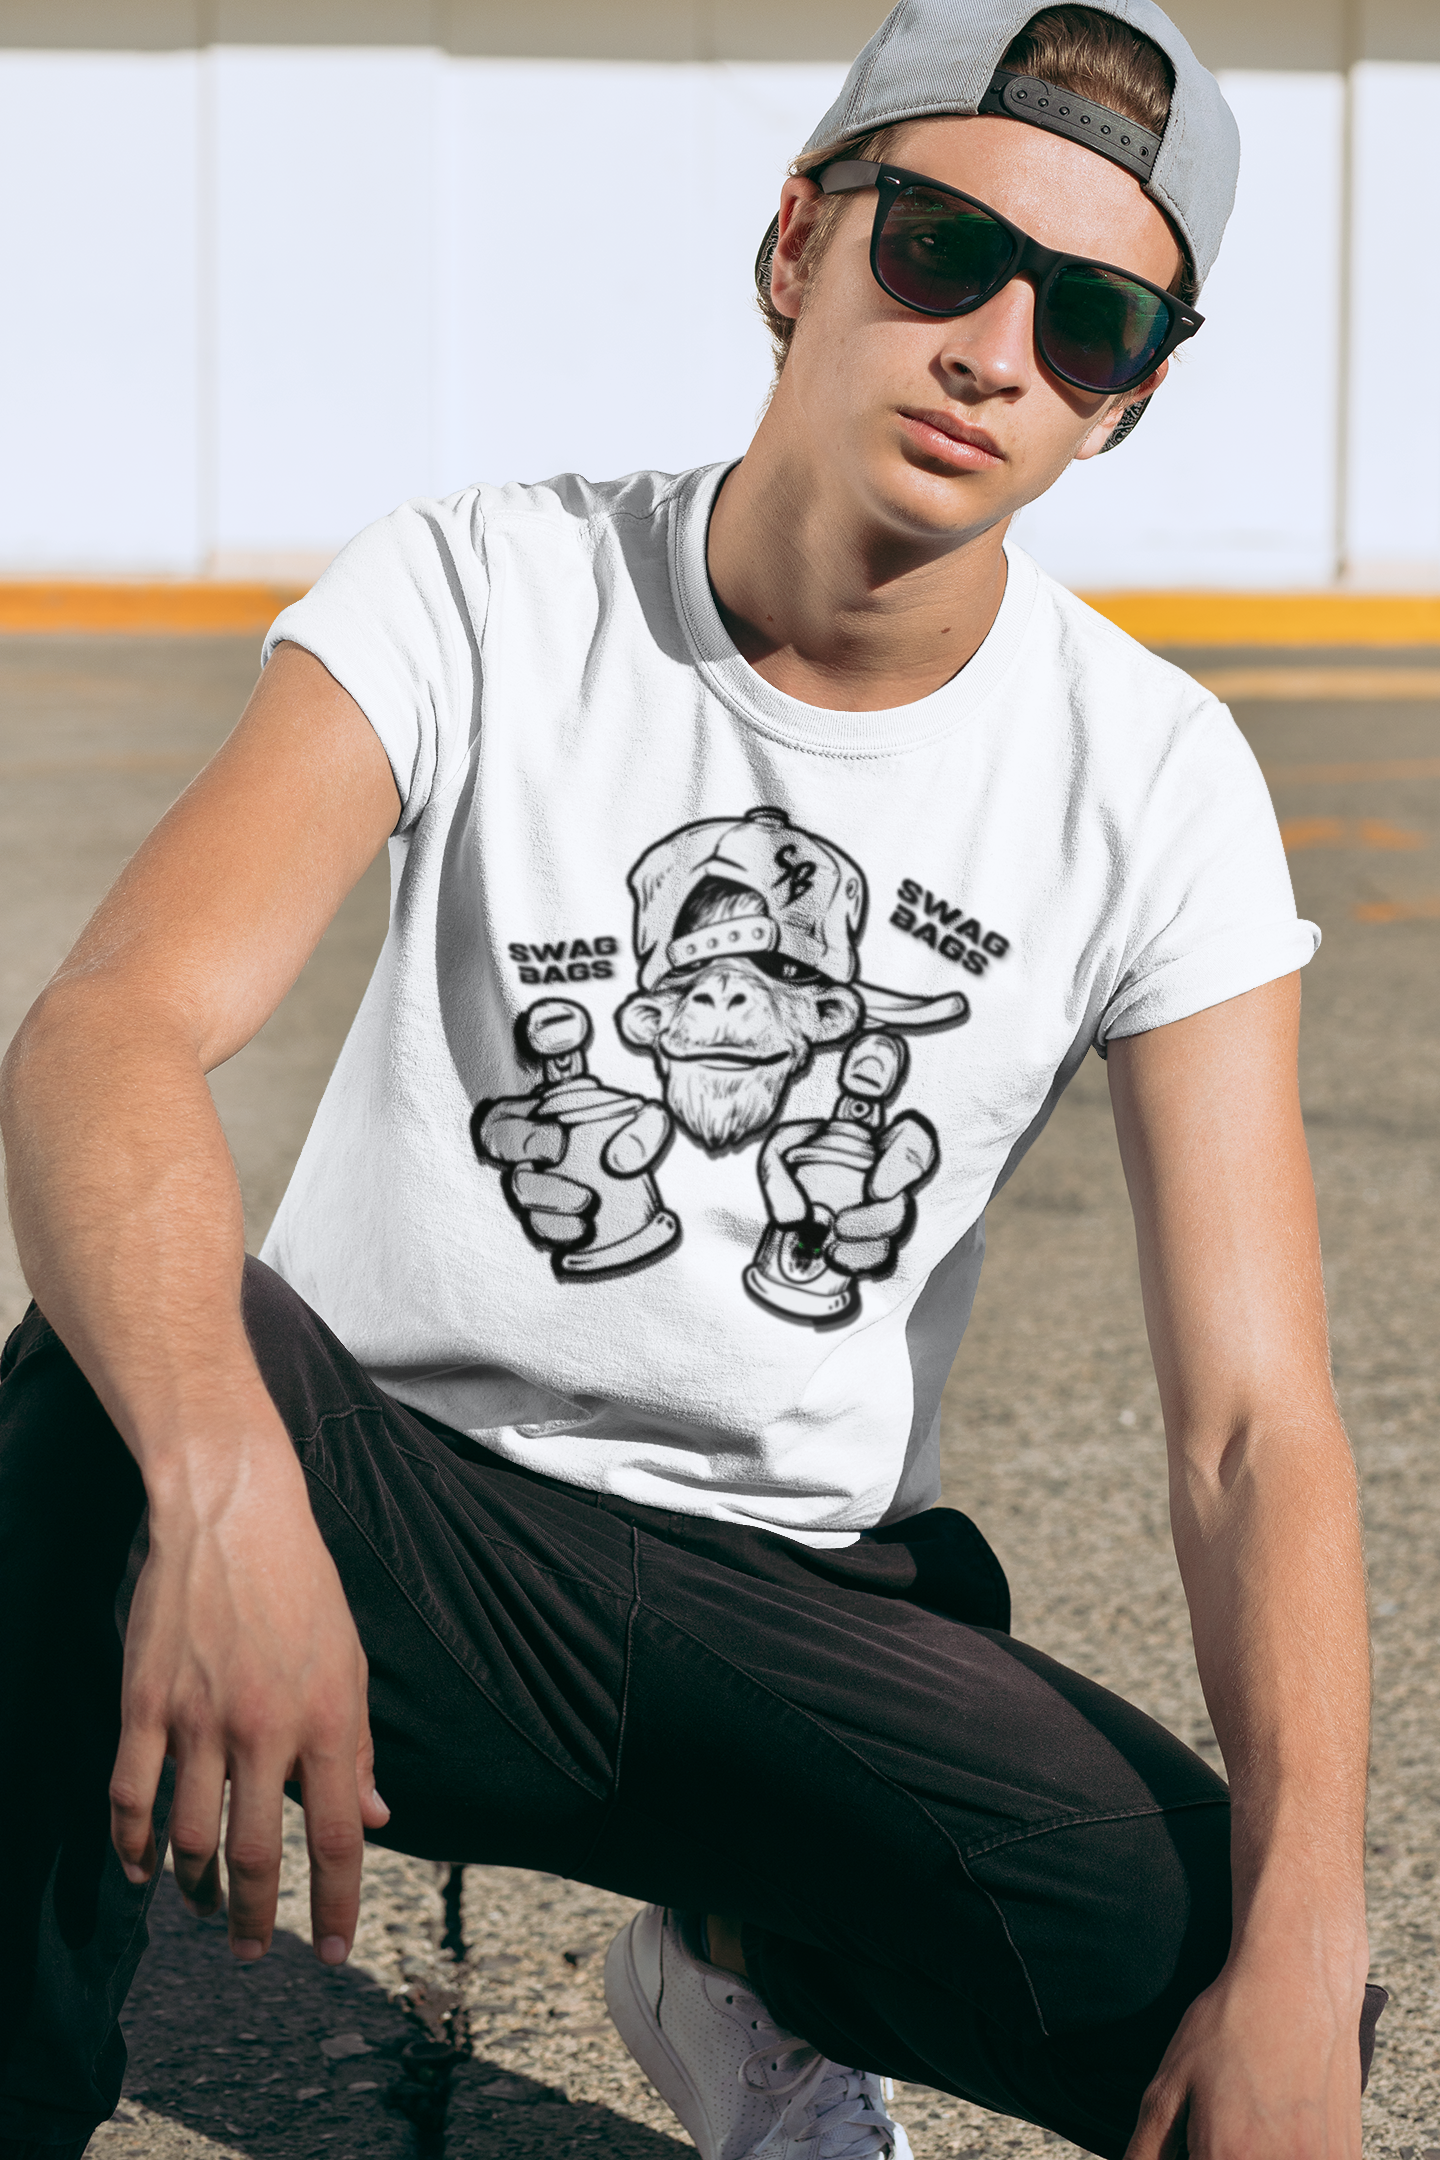 Swag Bags T-Shirts (Alternative Designs)